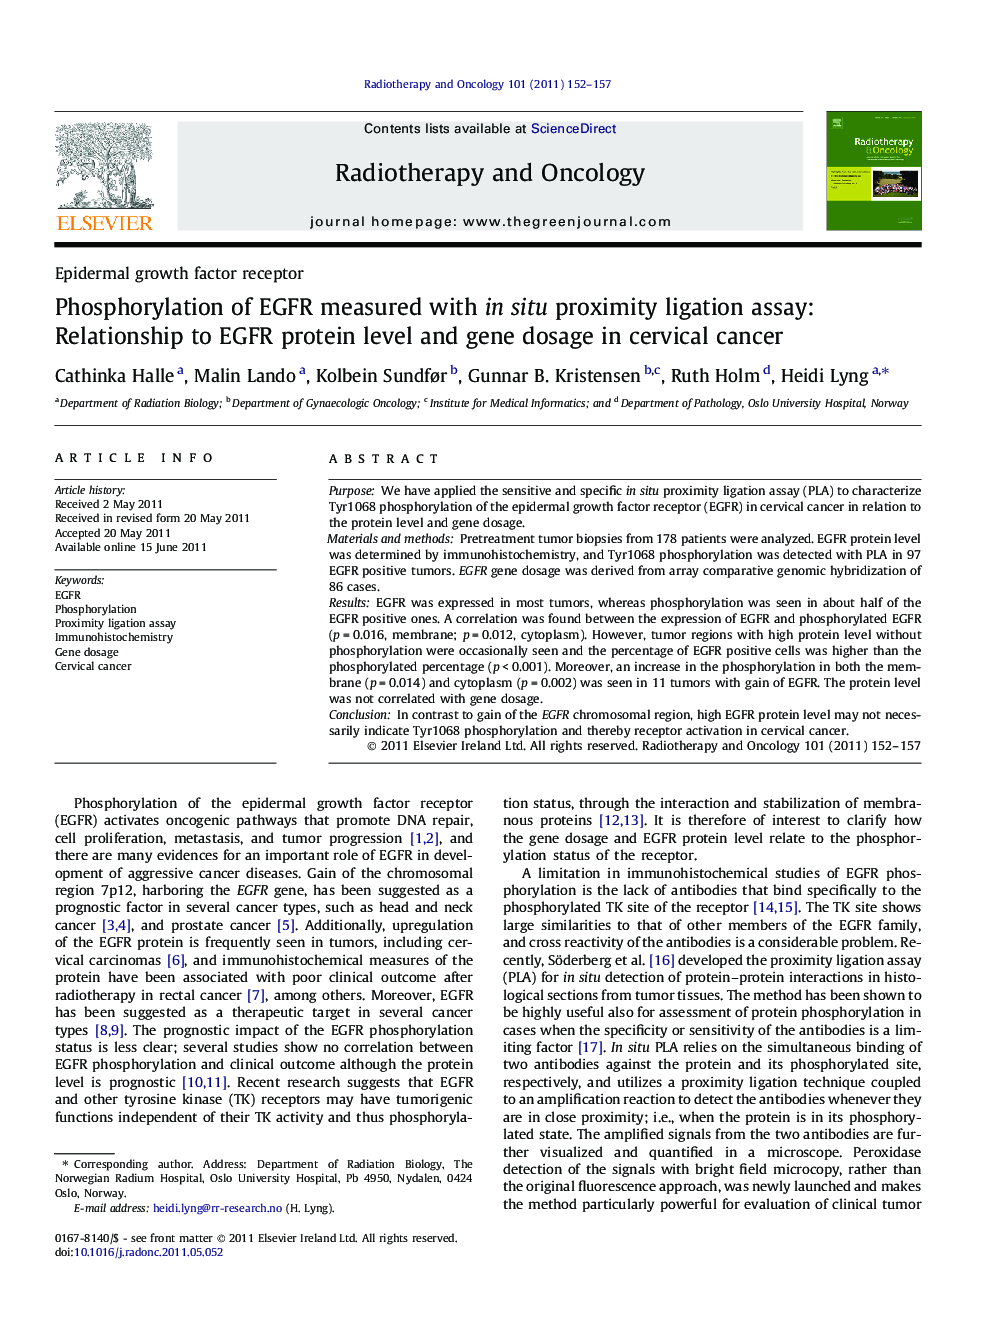 Phosphorylation of EGFR measured with in situ proximity ligation assay: Relationship to EGFR protein level and gene dosage in cervical cancer